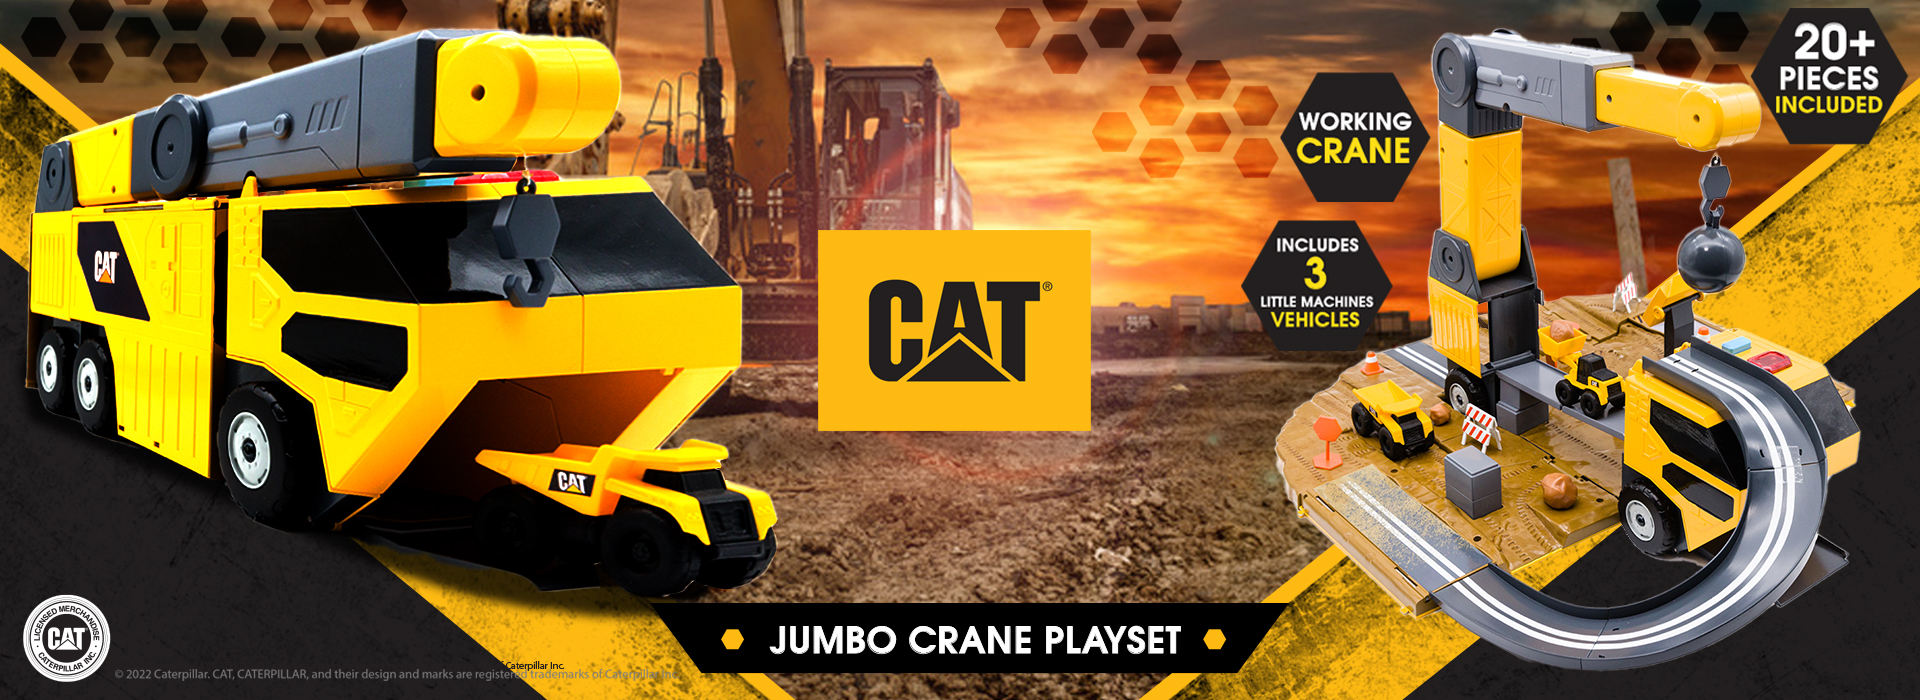 CAT Crane set 83333 web banner